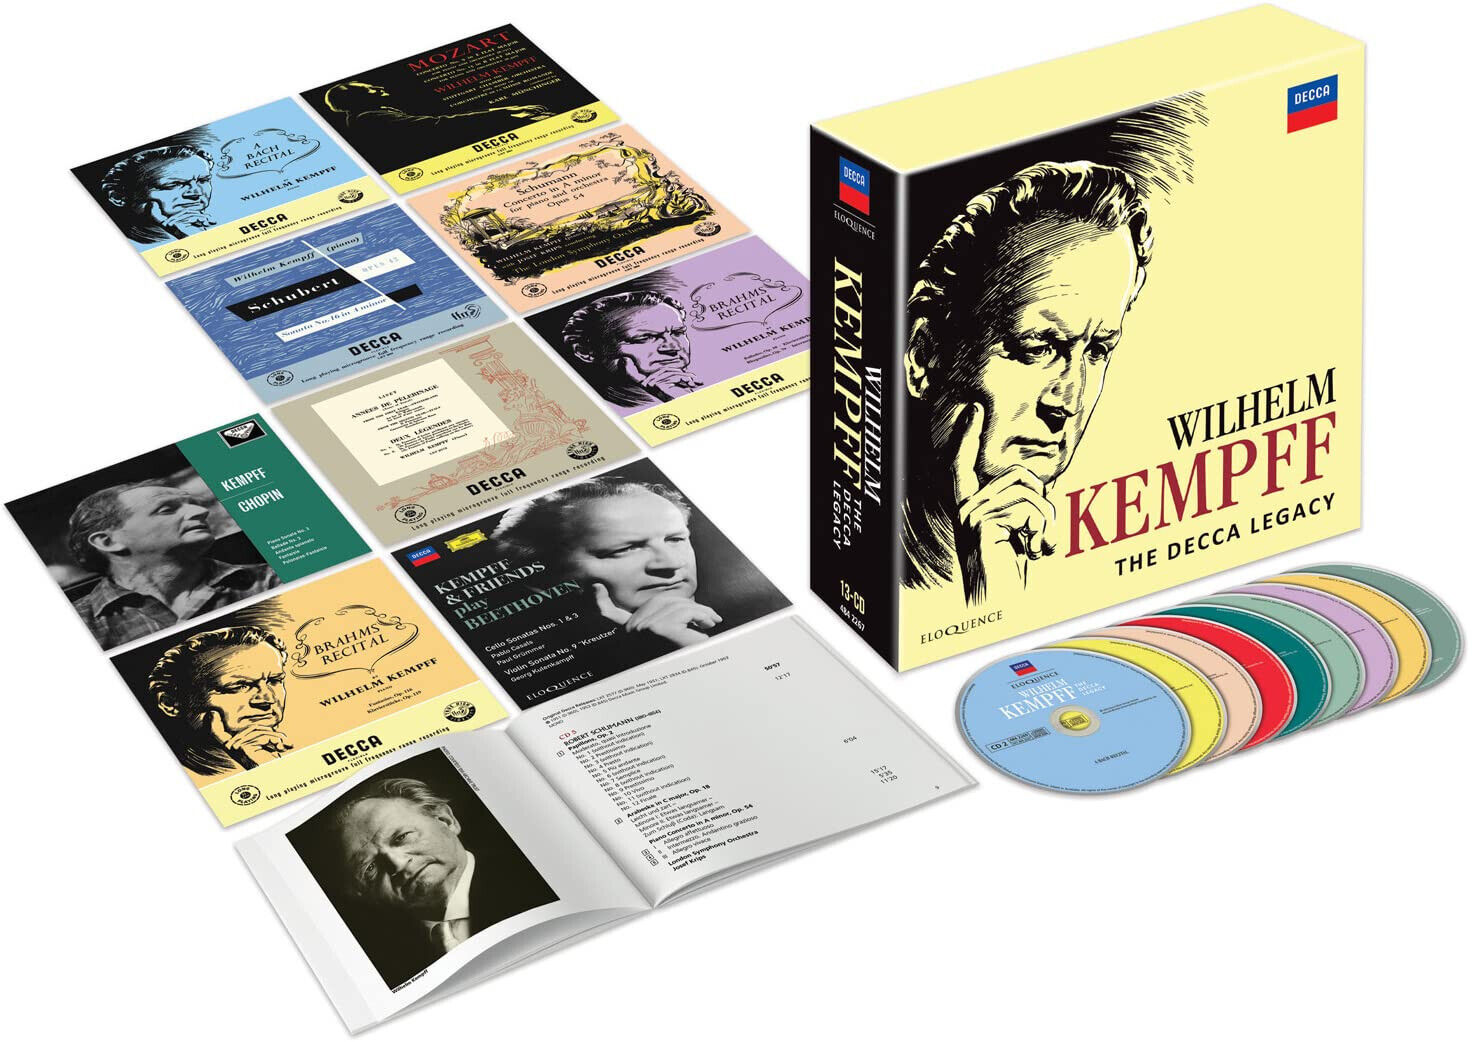 Wilhelm Kempff 빌헬름 켐프 데카 레이블 녹음집 (The Decca Legacy)